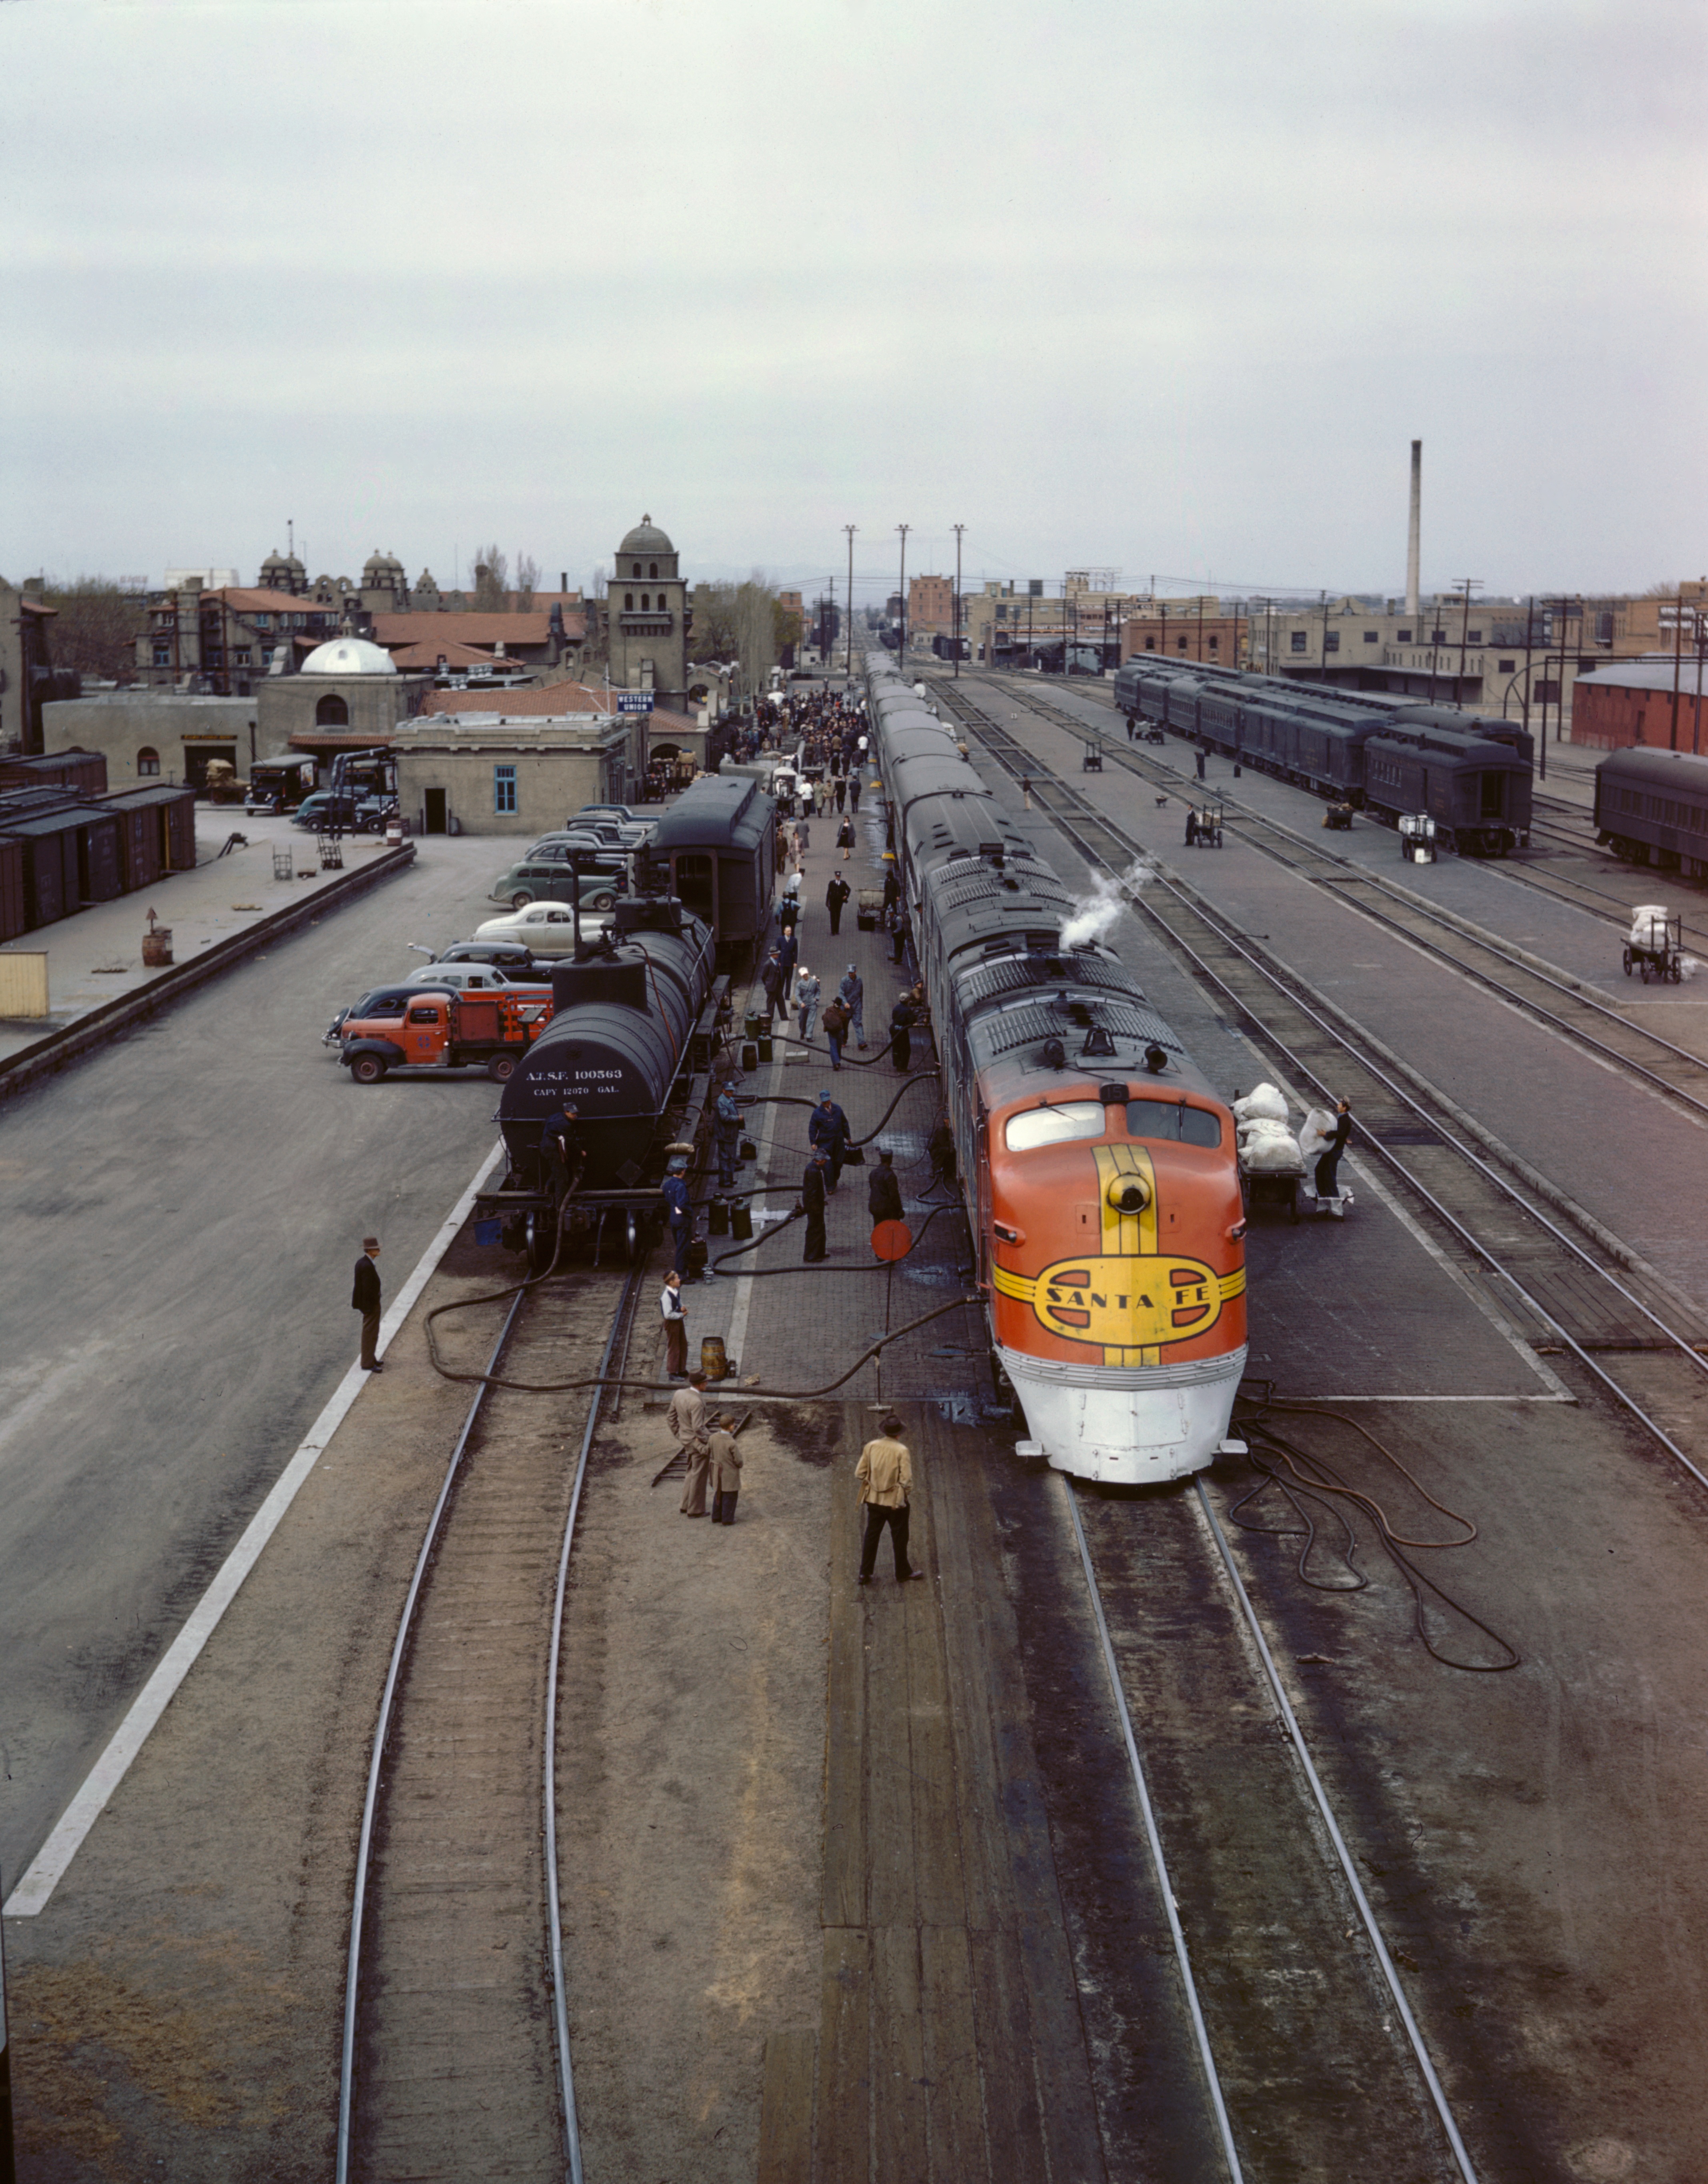 Train Diesel Locomotive Santa Fe Railway Railroad Track Rail Yard City Urban People Vintage Portrait 4270x5460